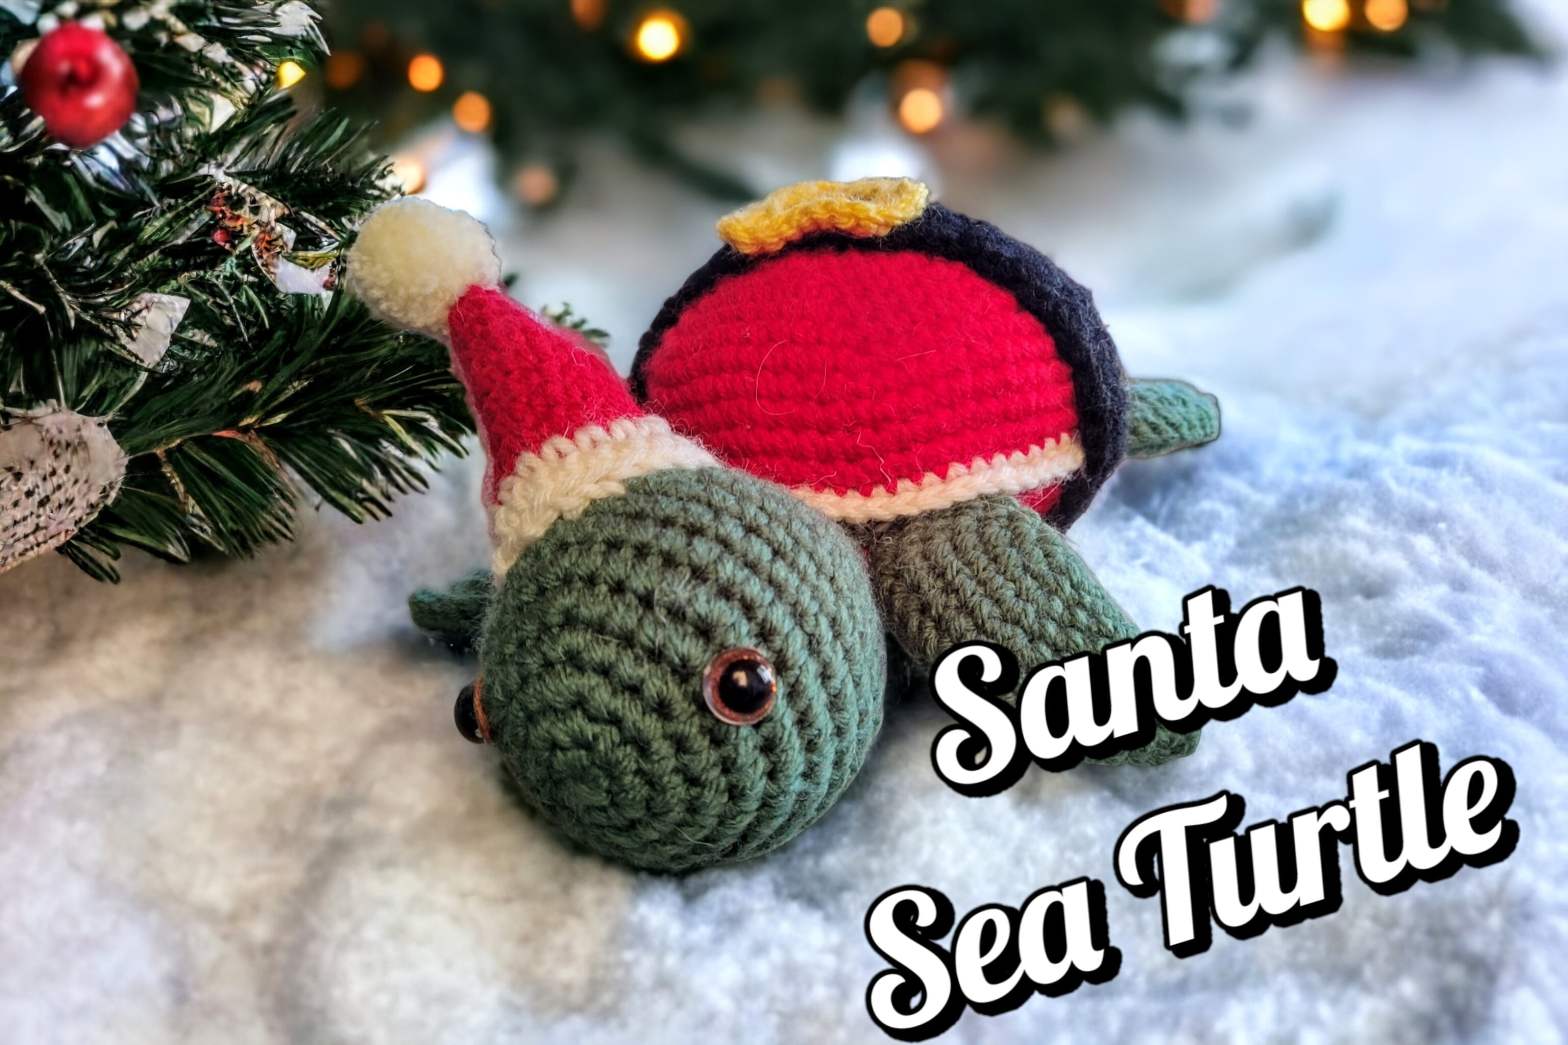 How to Make a Santa Sea Turtle